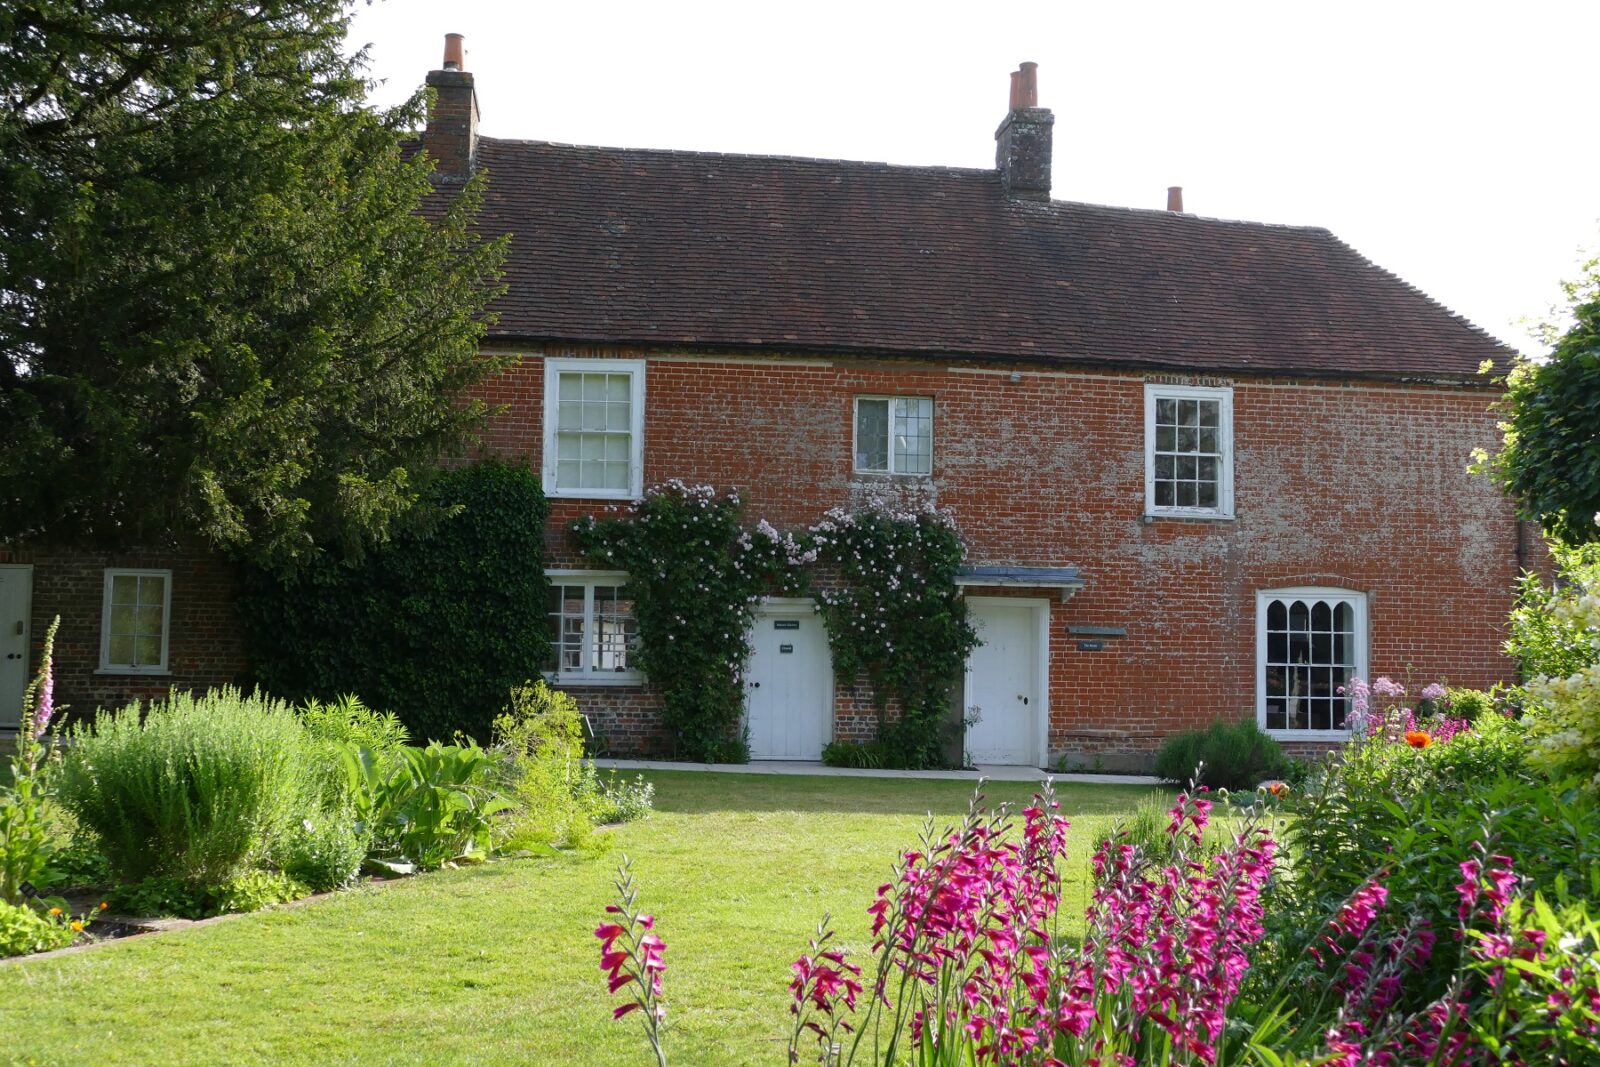 Jane Austen's House and garden in the sunshine